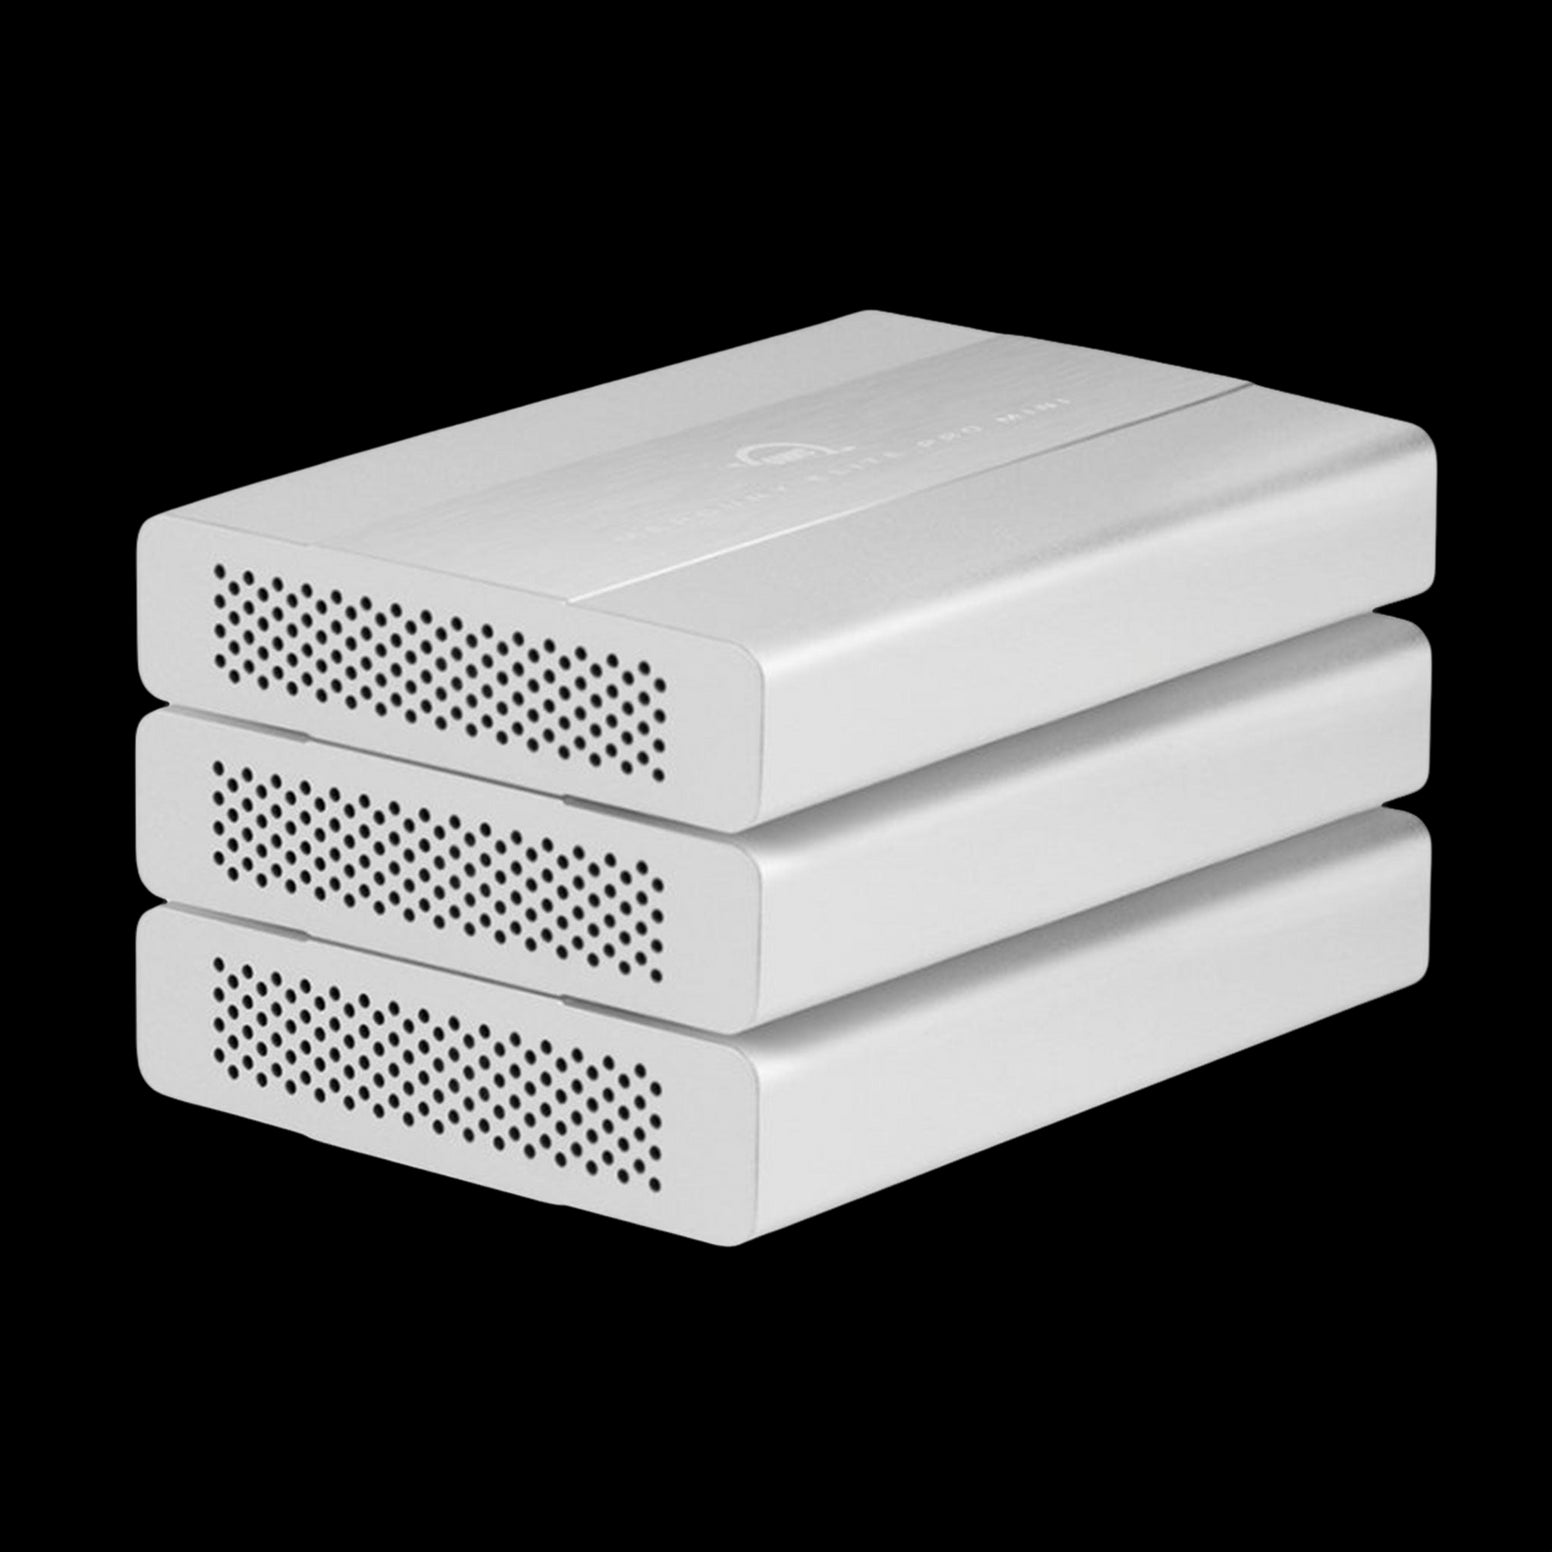 500GB OWC SSD Mercury Elite Pro mini Portable External Storage (USB 3.1 Gen 2 & eSATA) - Discontinued